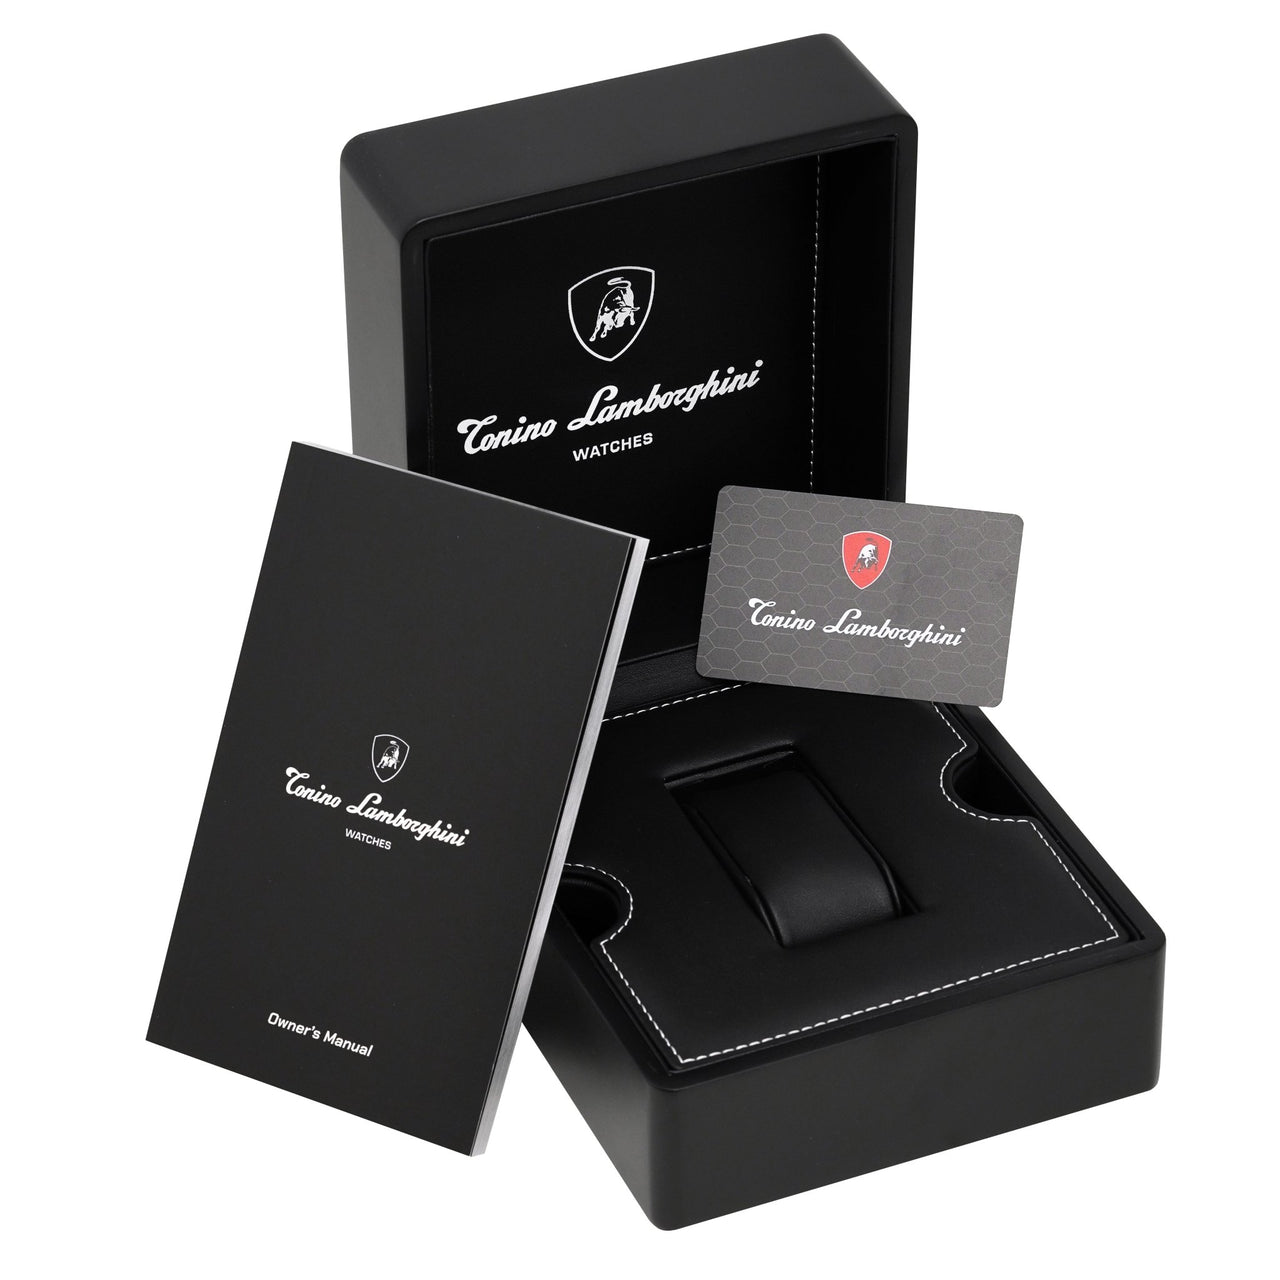 Tonino Lamborghini Men's Chronograph Watch New Spyder Rose Gold TLF-A13-8 - Watches & Crystals